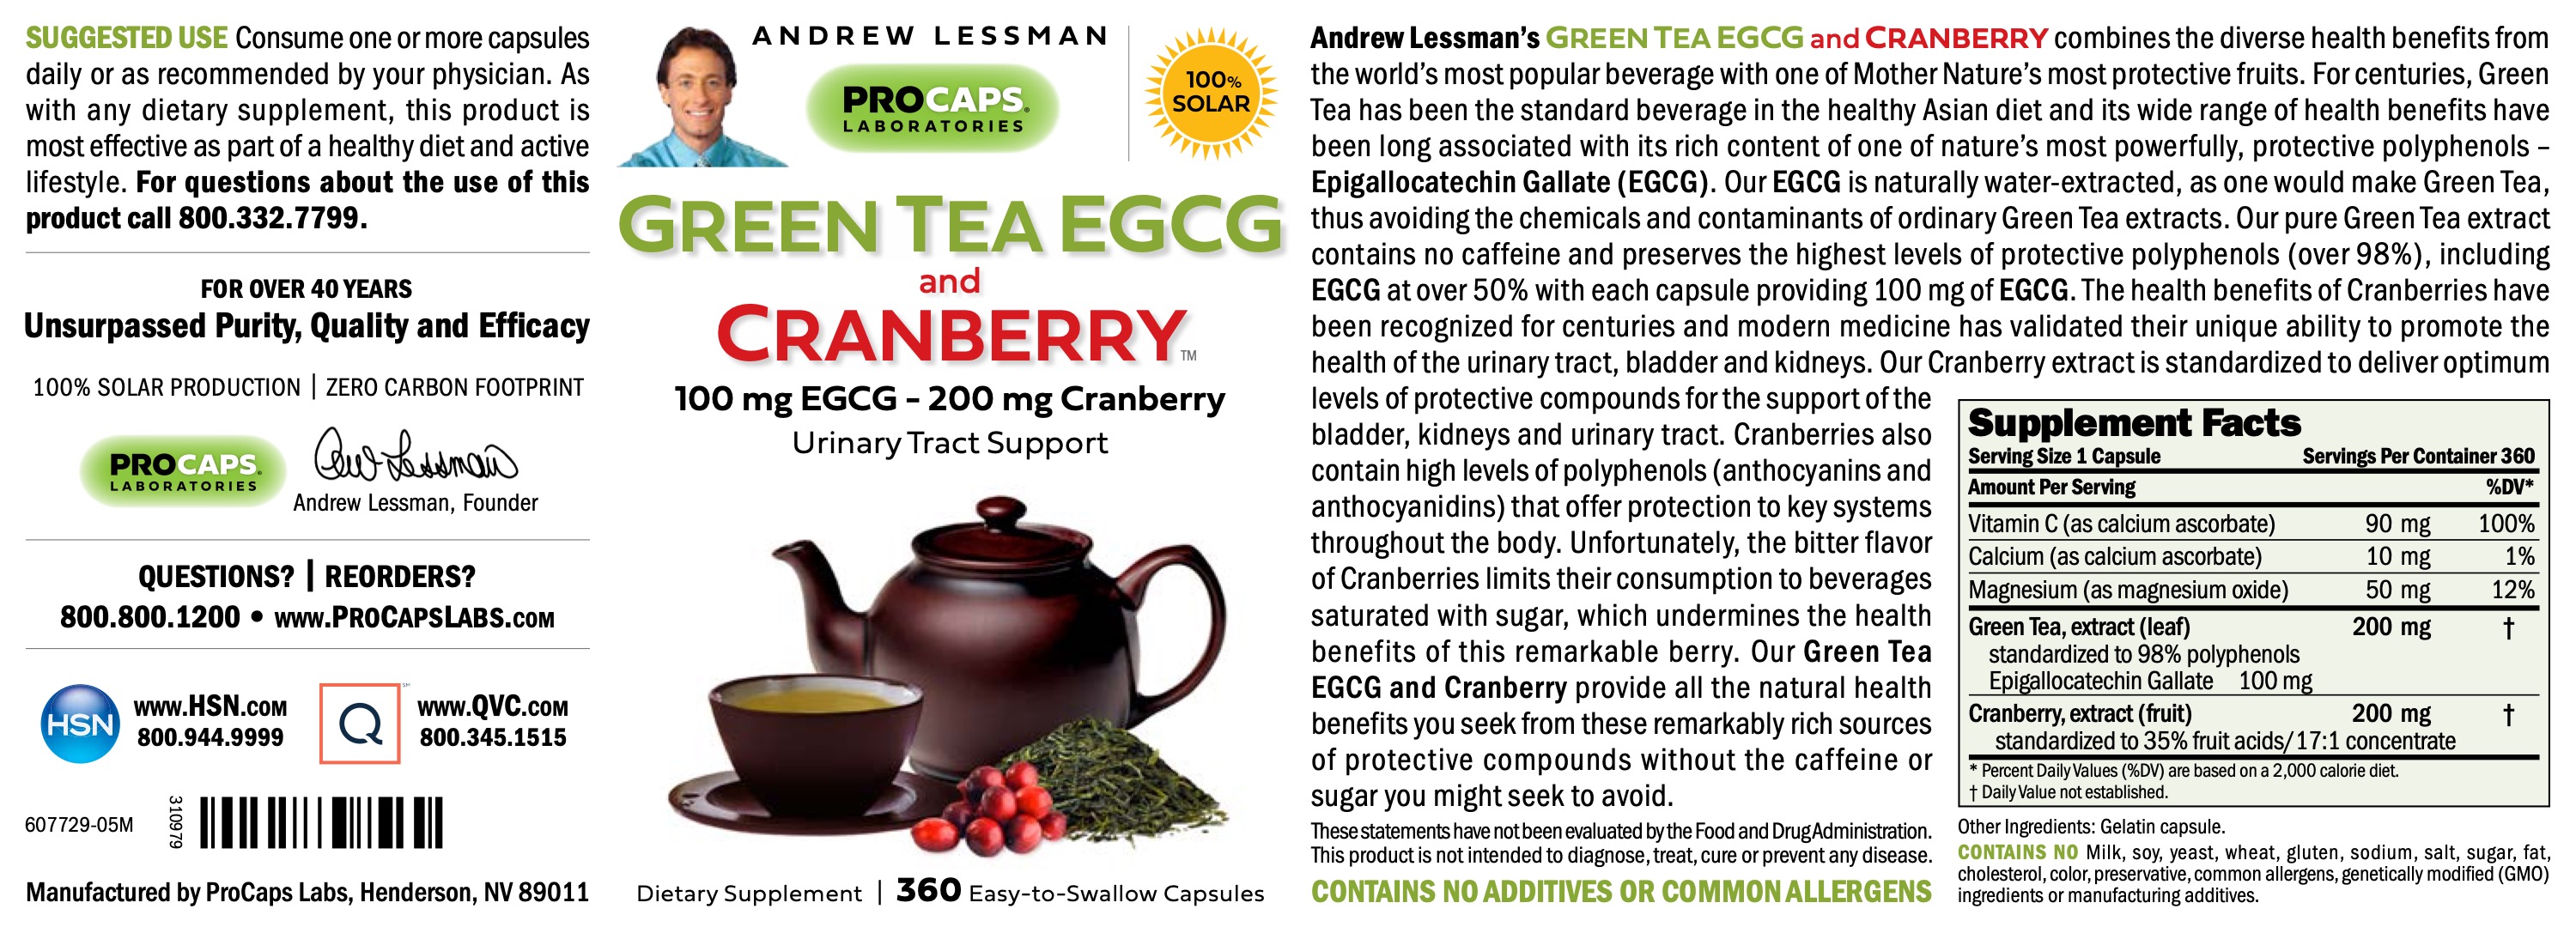 Green-Tea-EGCG-And-Cranberry-Capsules-Anti-oxidants